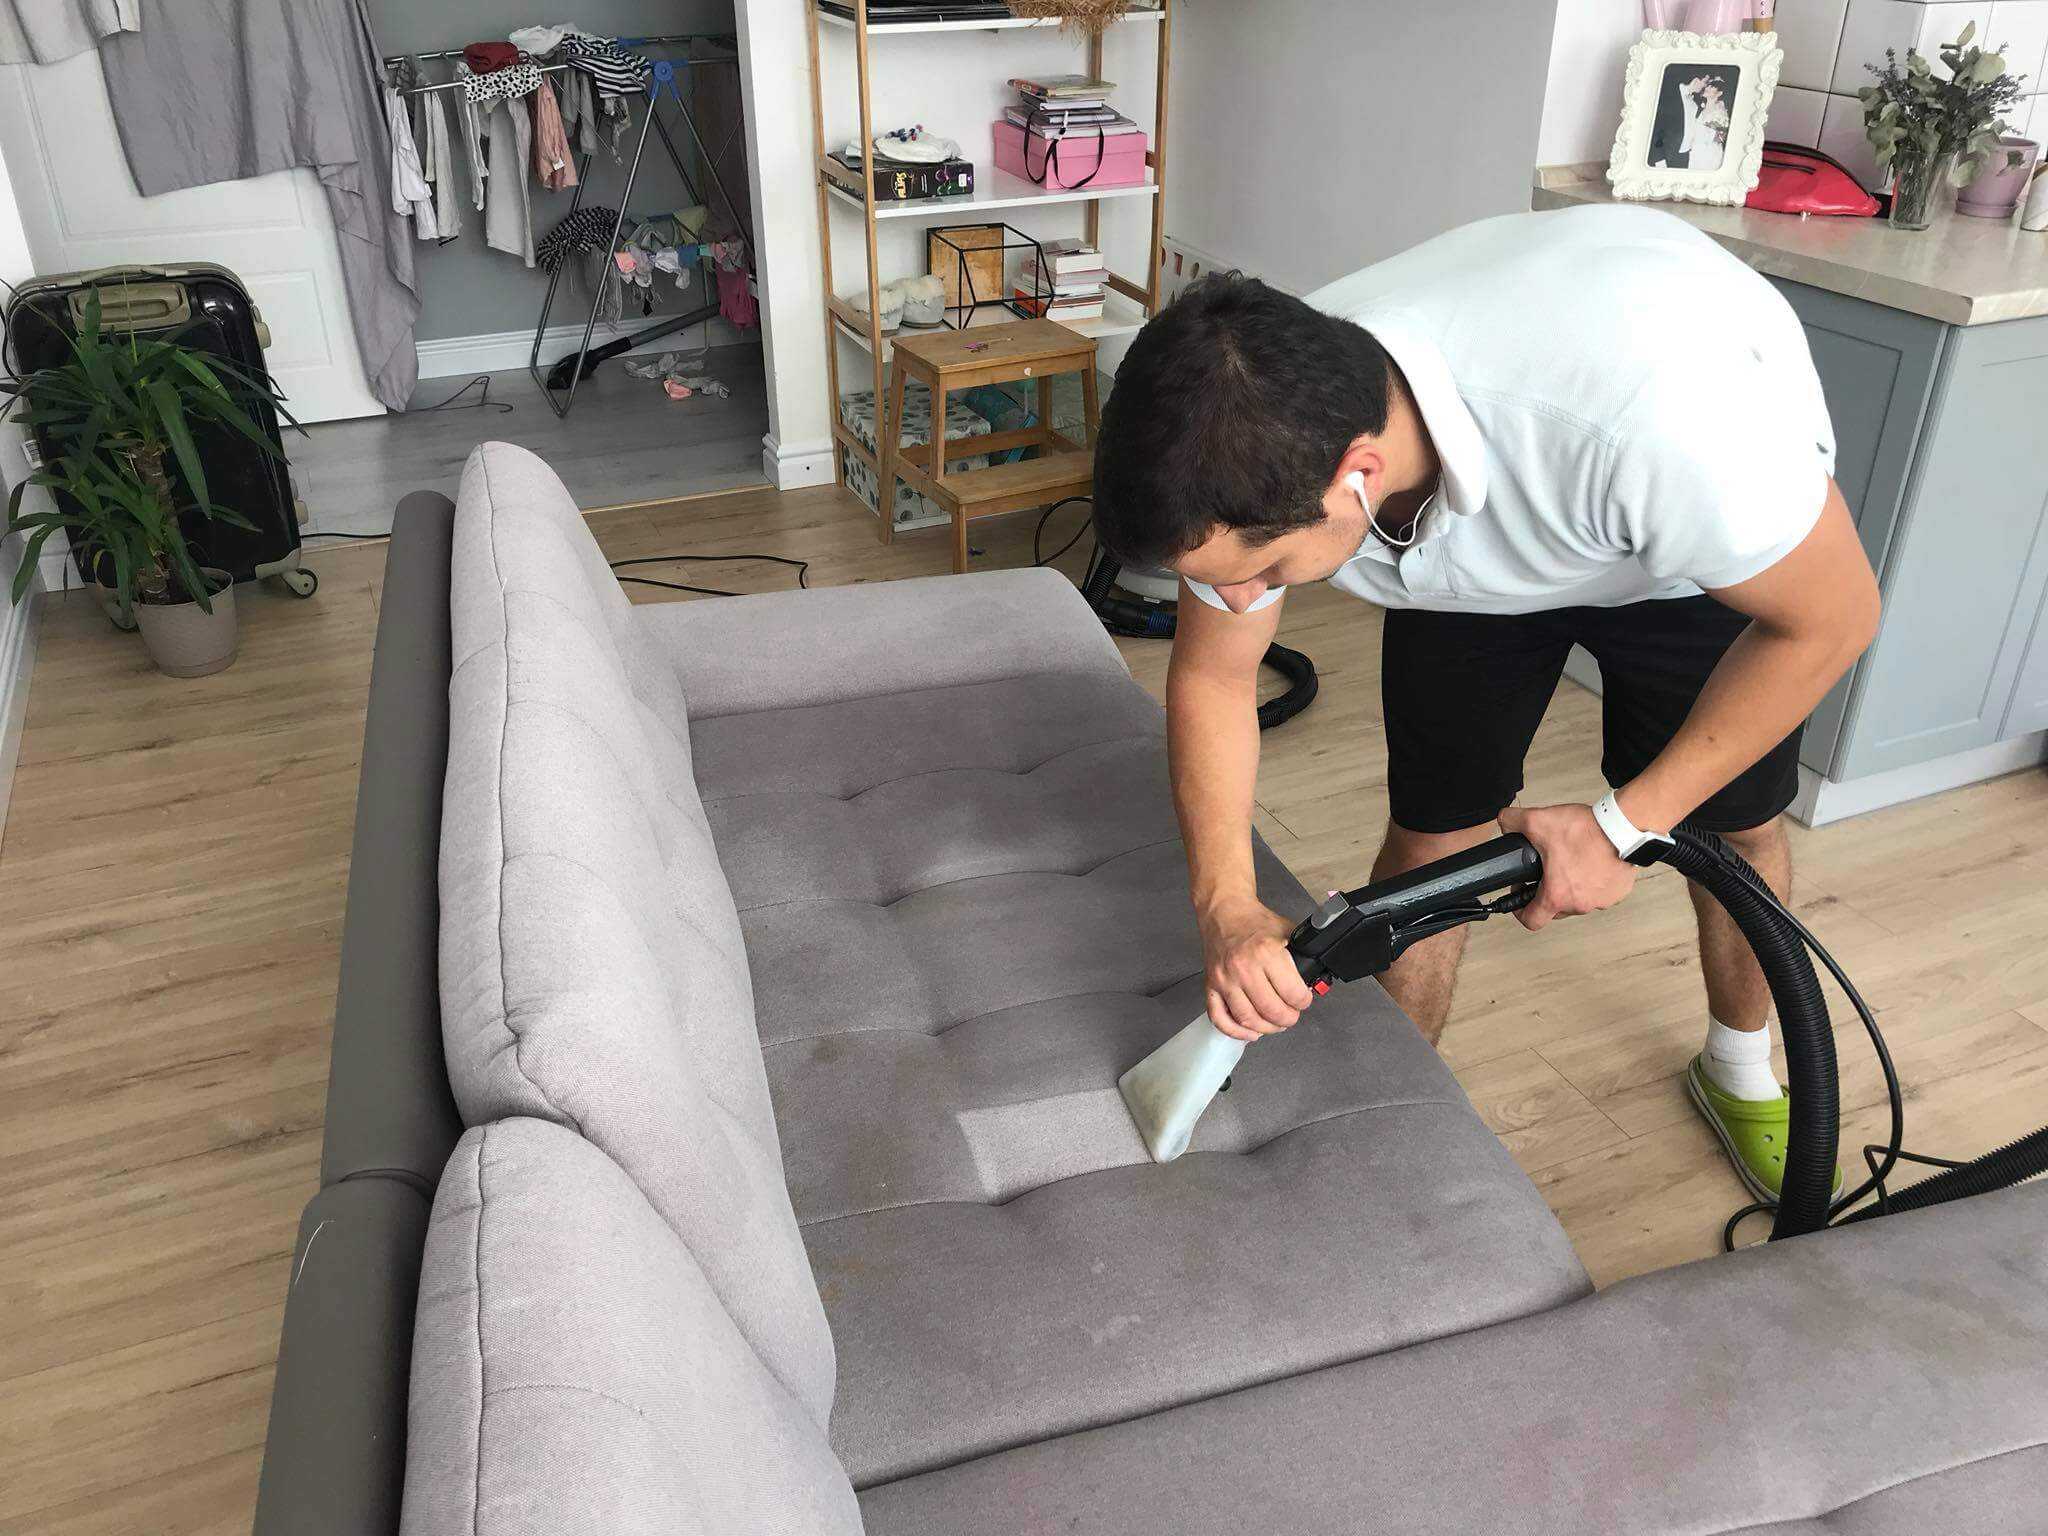 Химчистка мягкой мебели на дому – как её проводят и когда она нужна